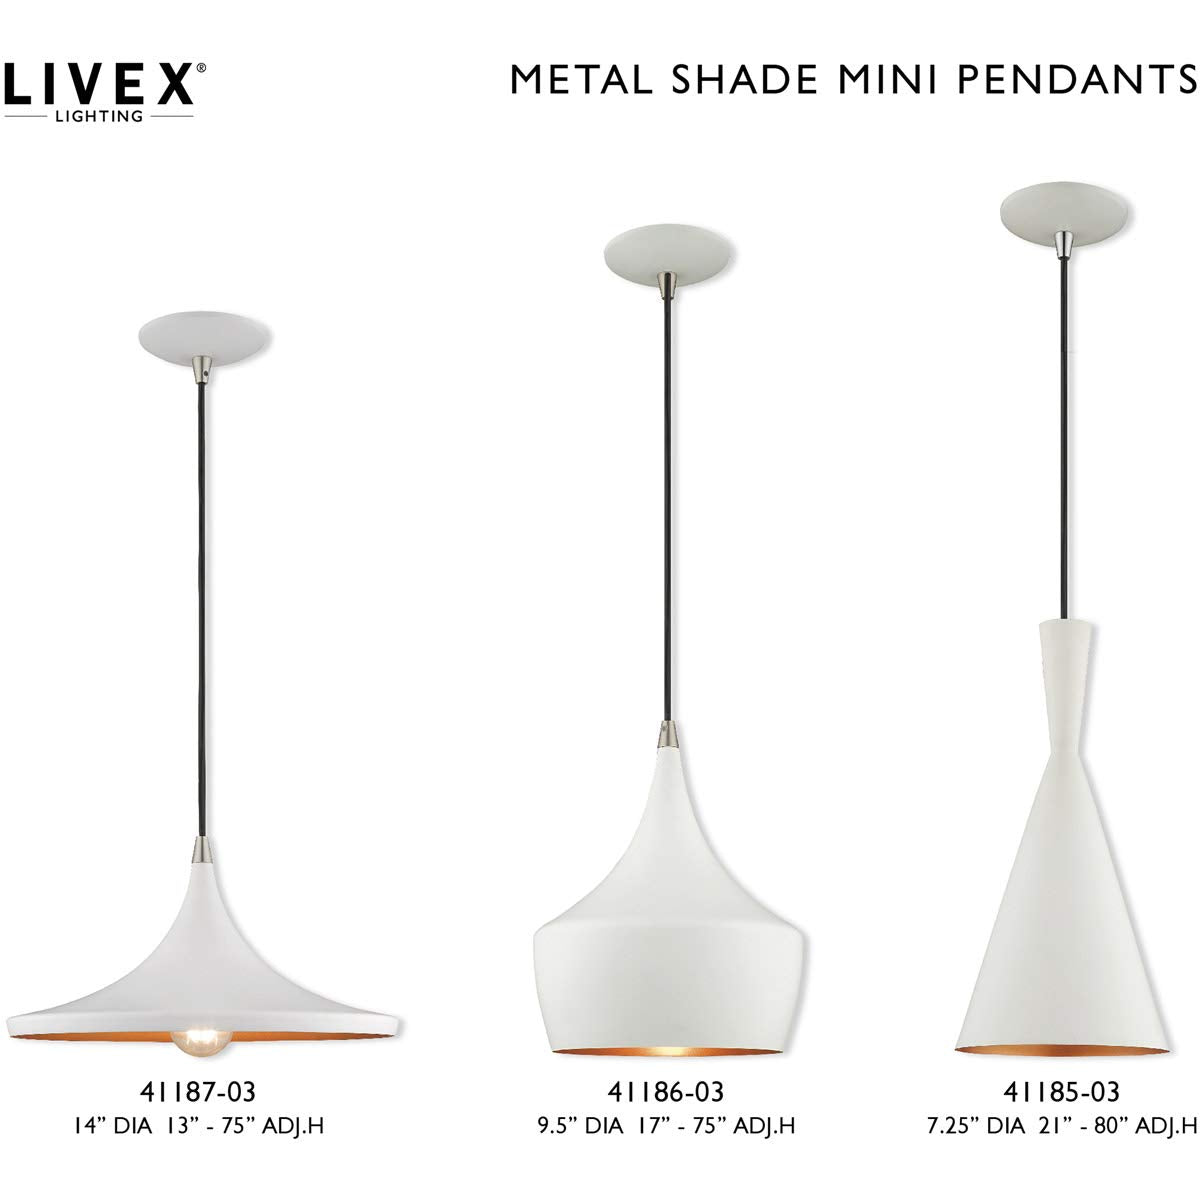 Livex Lighting 41186-03 Metal Shade - 9.5" One Light Mini Pendant, White Finish with White Metal/Gold Shade